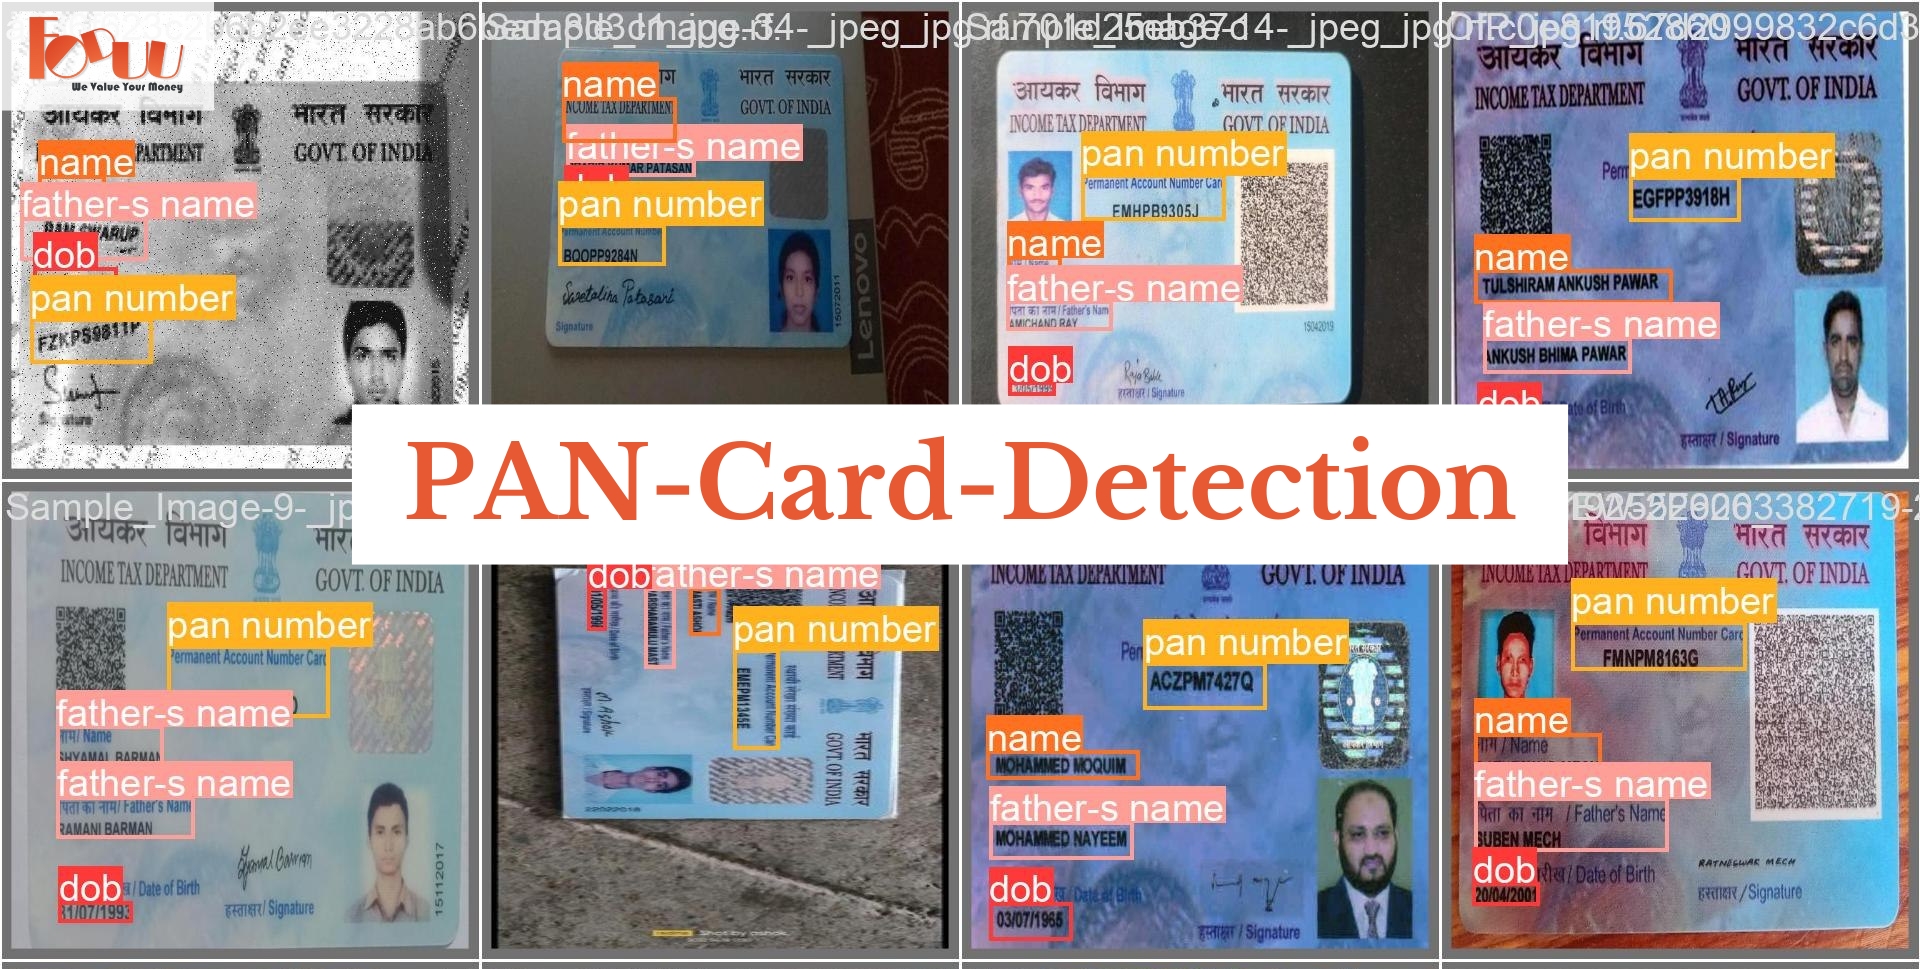 foduucom/pan-card-detection